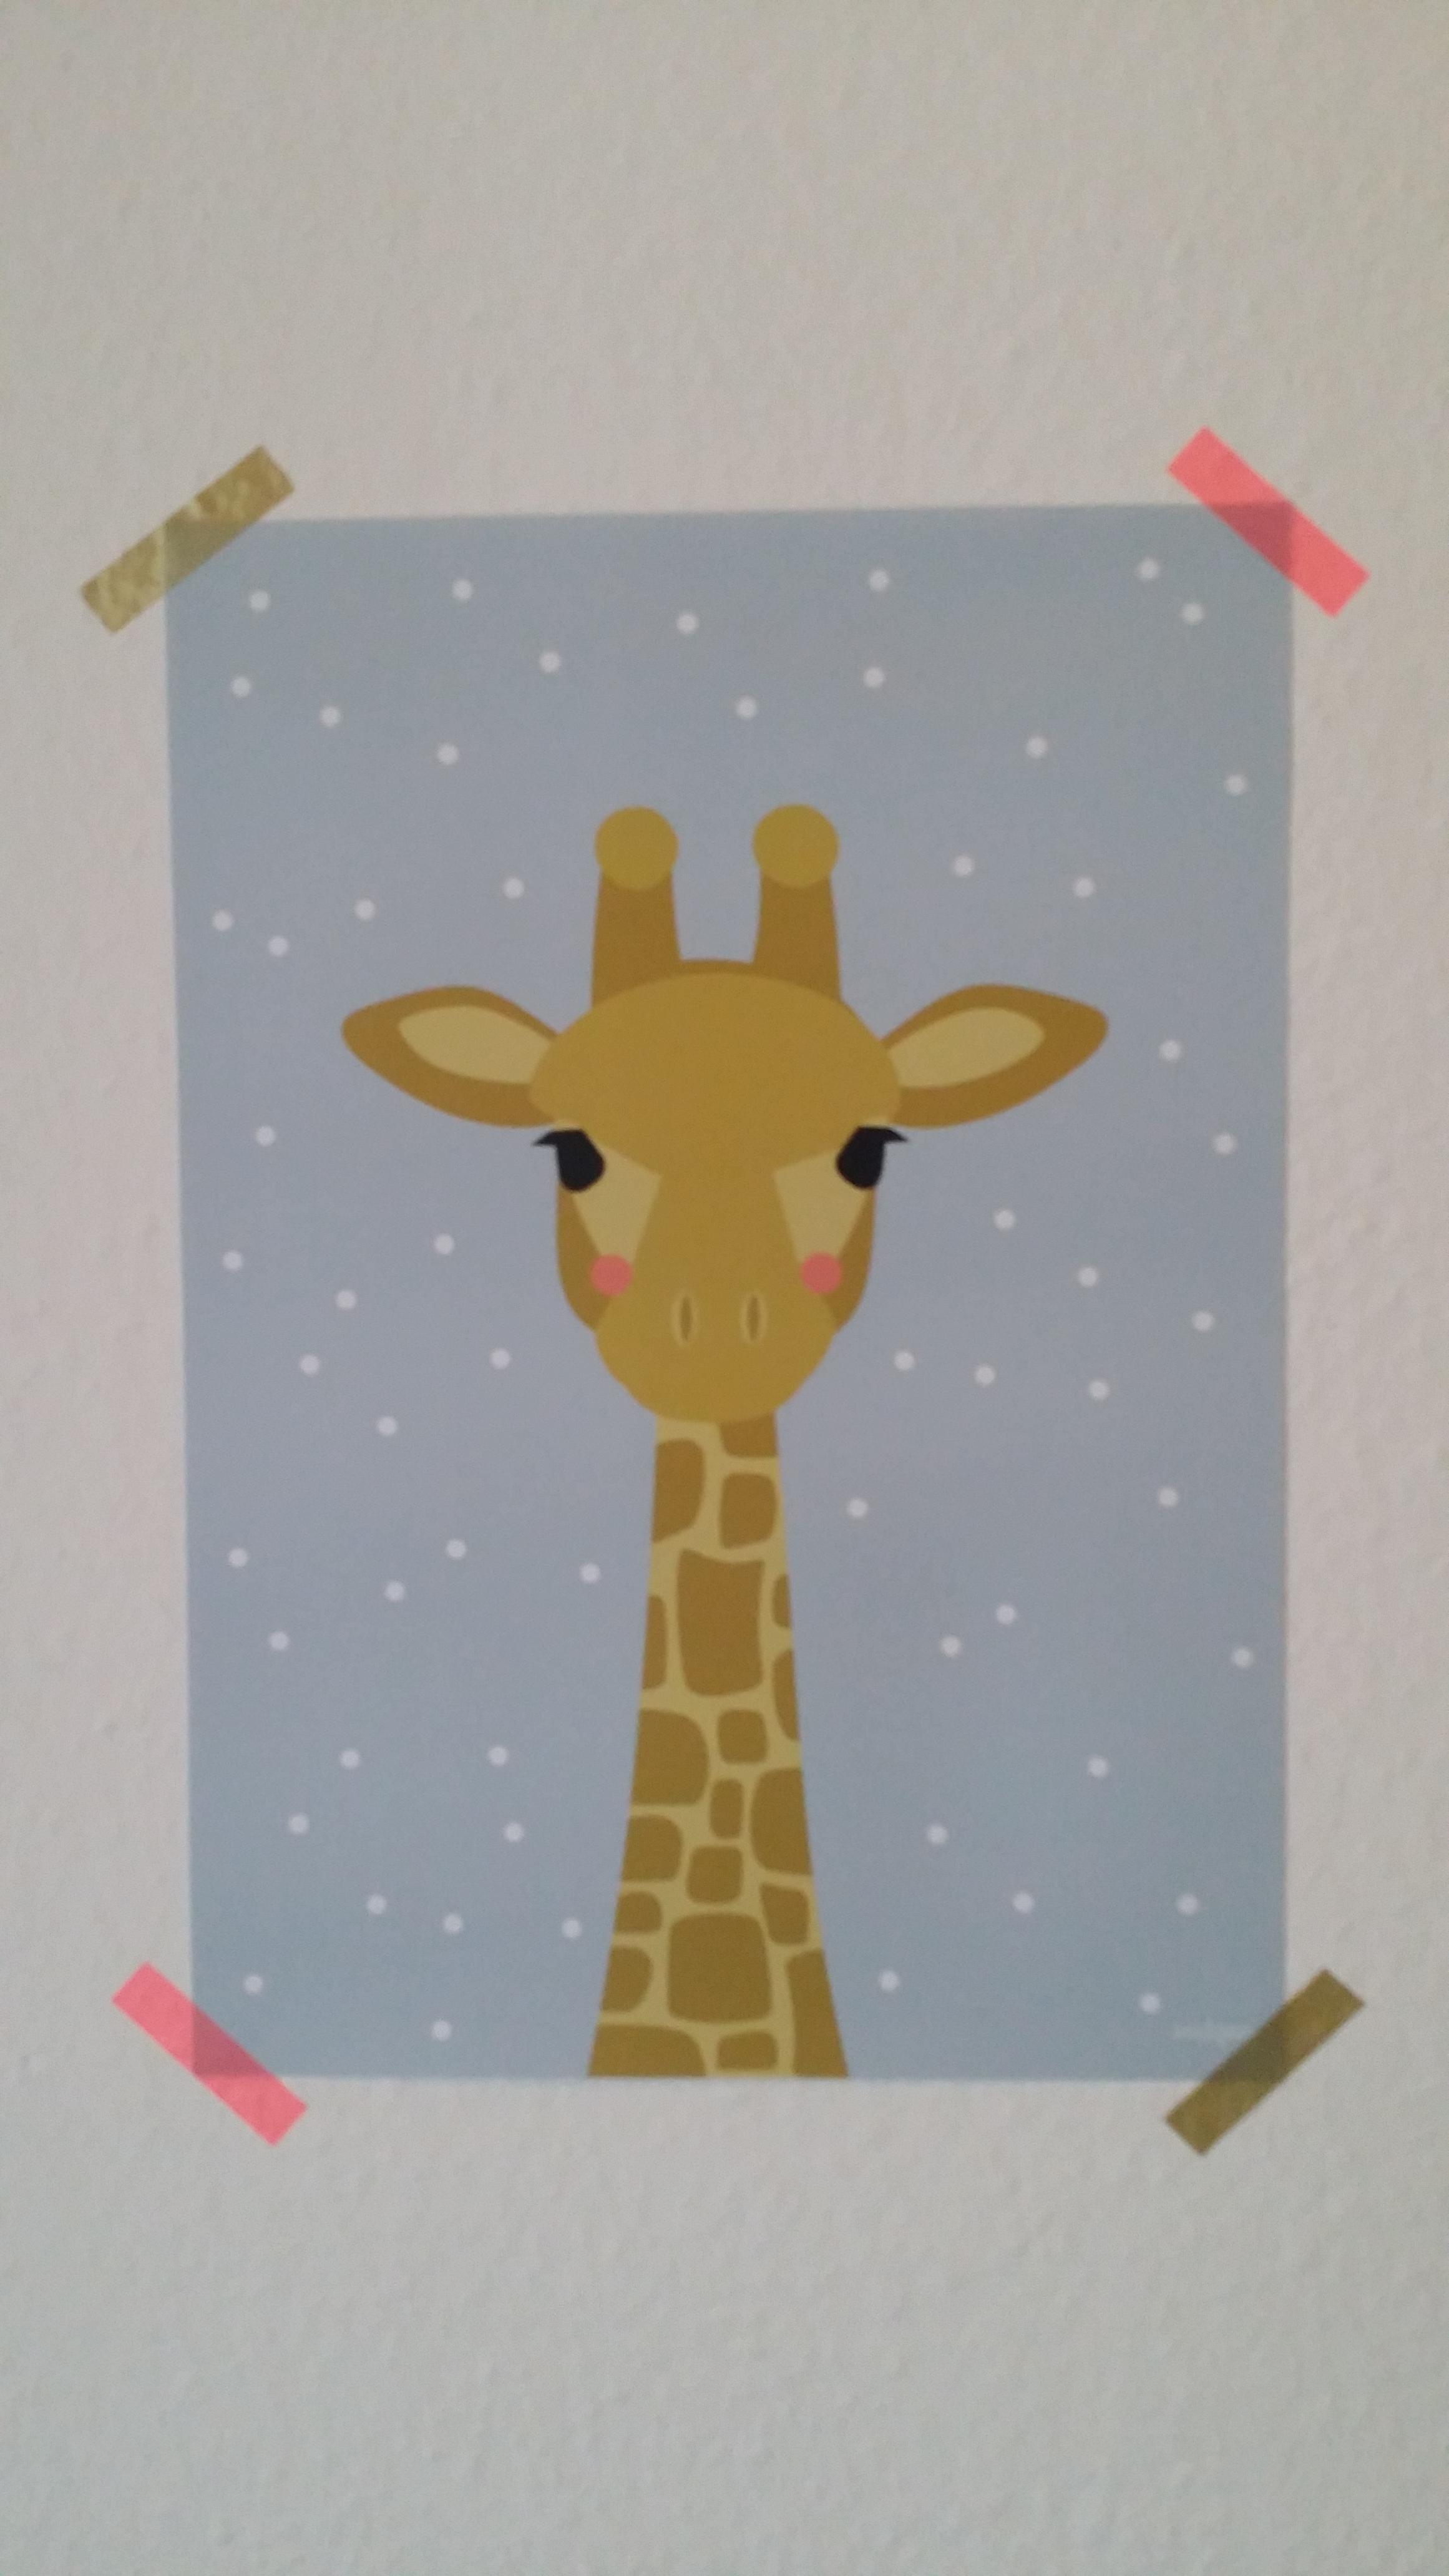 Giraffenparty! #giraffeiswatching #guggich #COUCHstyleislive #postkartendekoidee